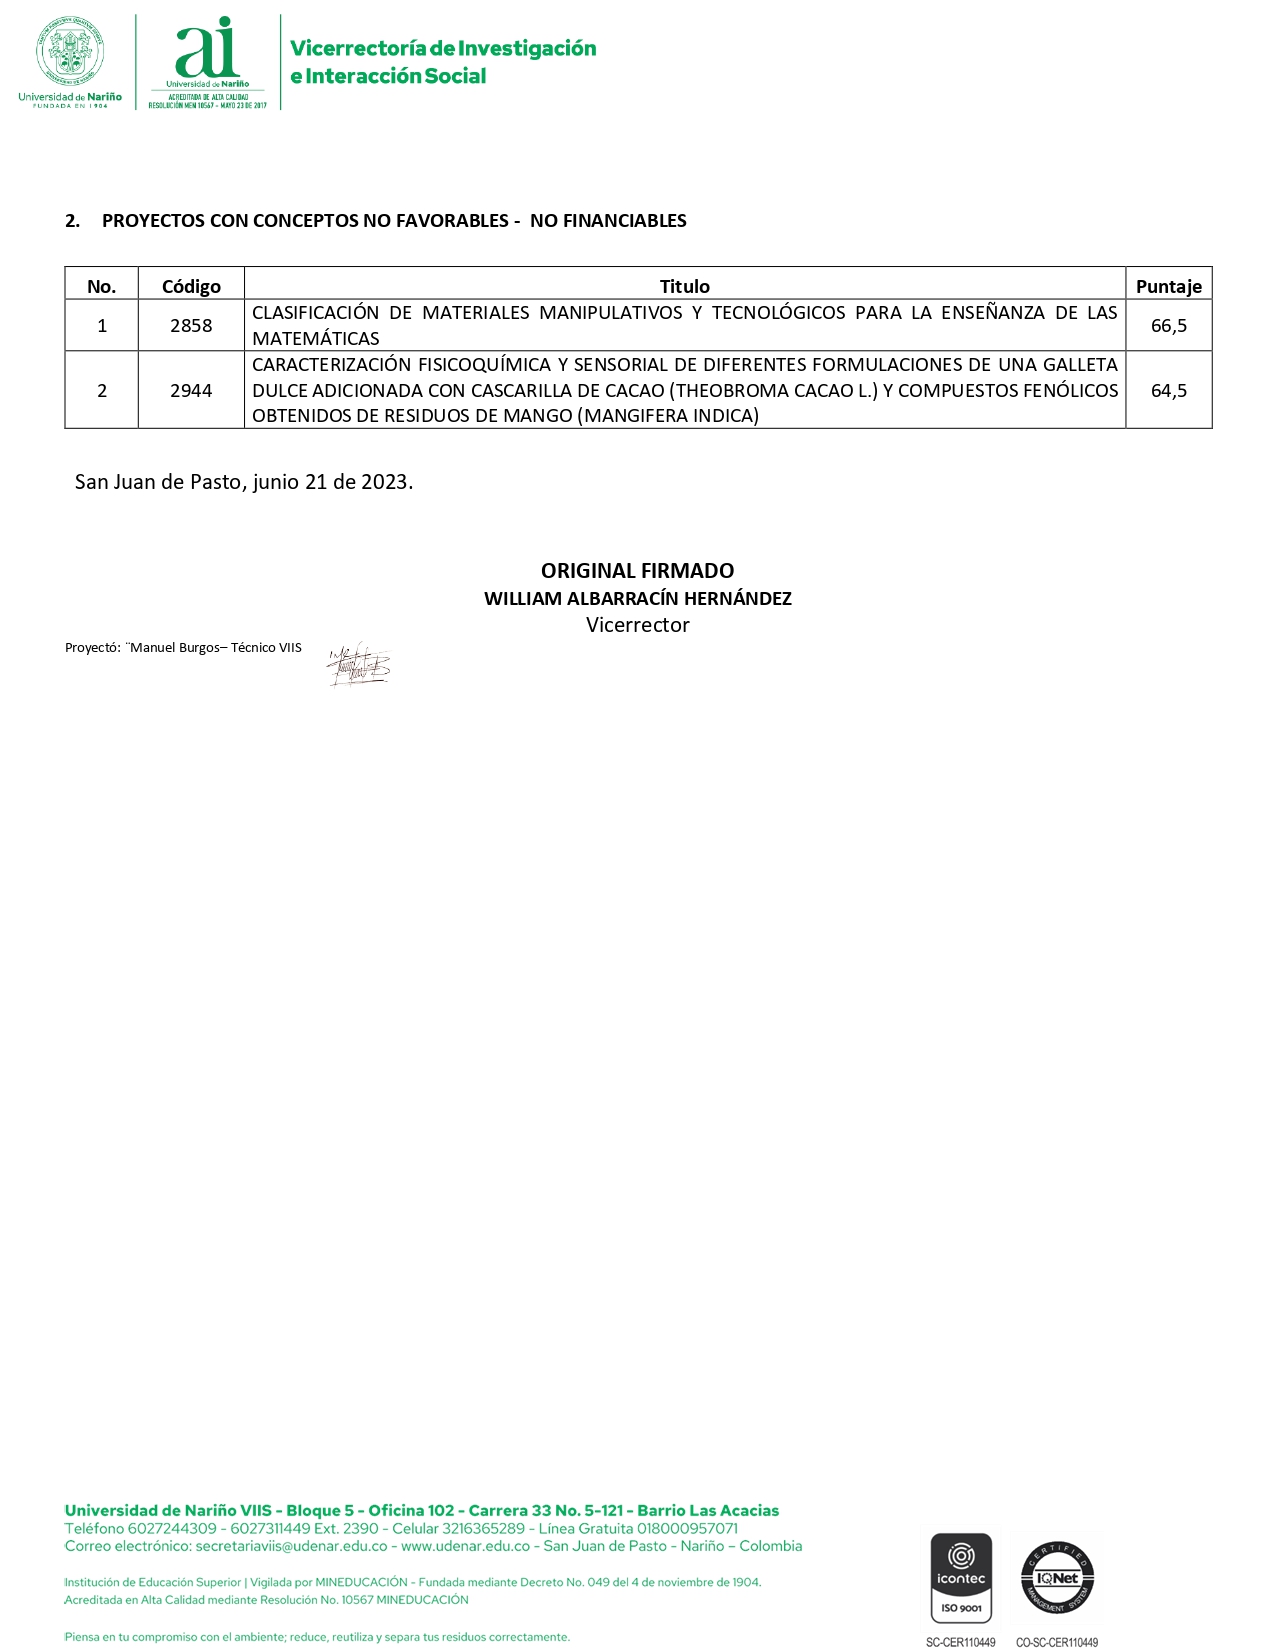 UDENAR-PERIODICO-COMUNICADO-003-CONVOCATORIAS-DE-INVESTIGACION-2_page-0008